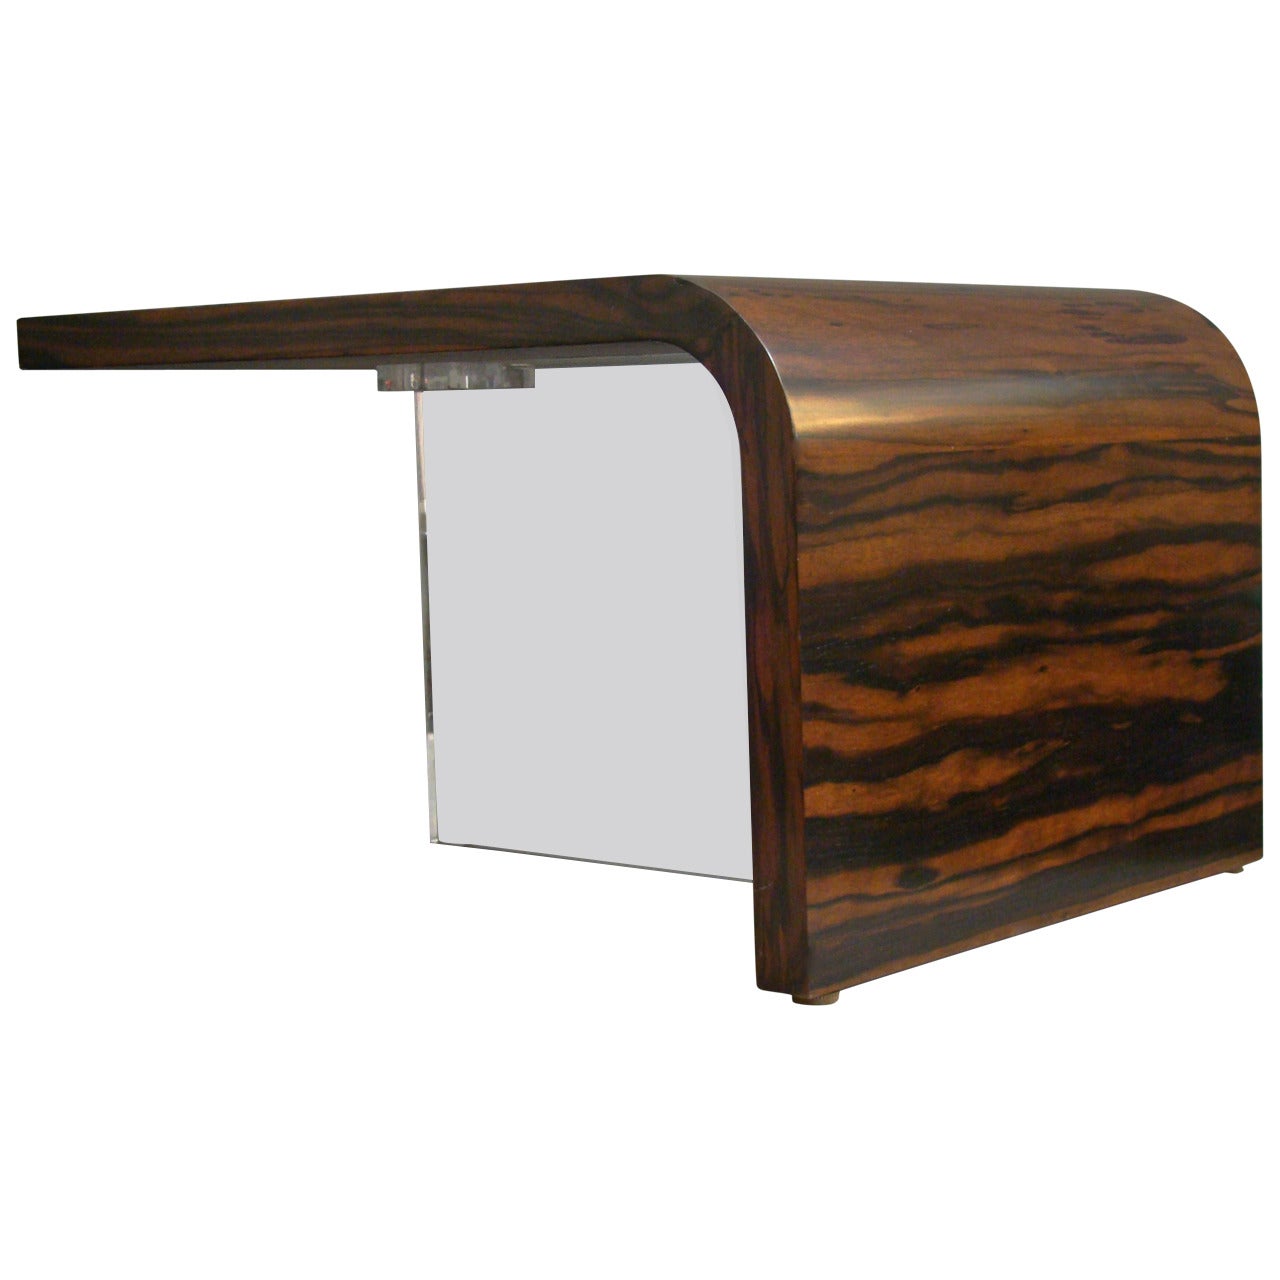 Vladimir Kagan Modernist Exotic Hardwood and Lucite Table For Sale